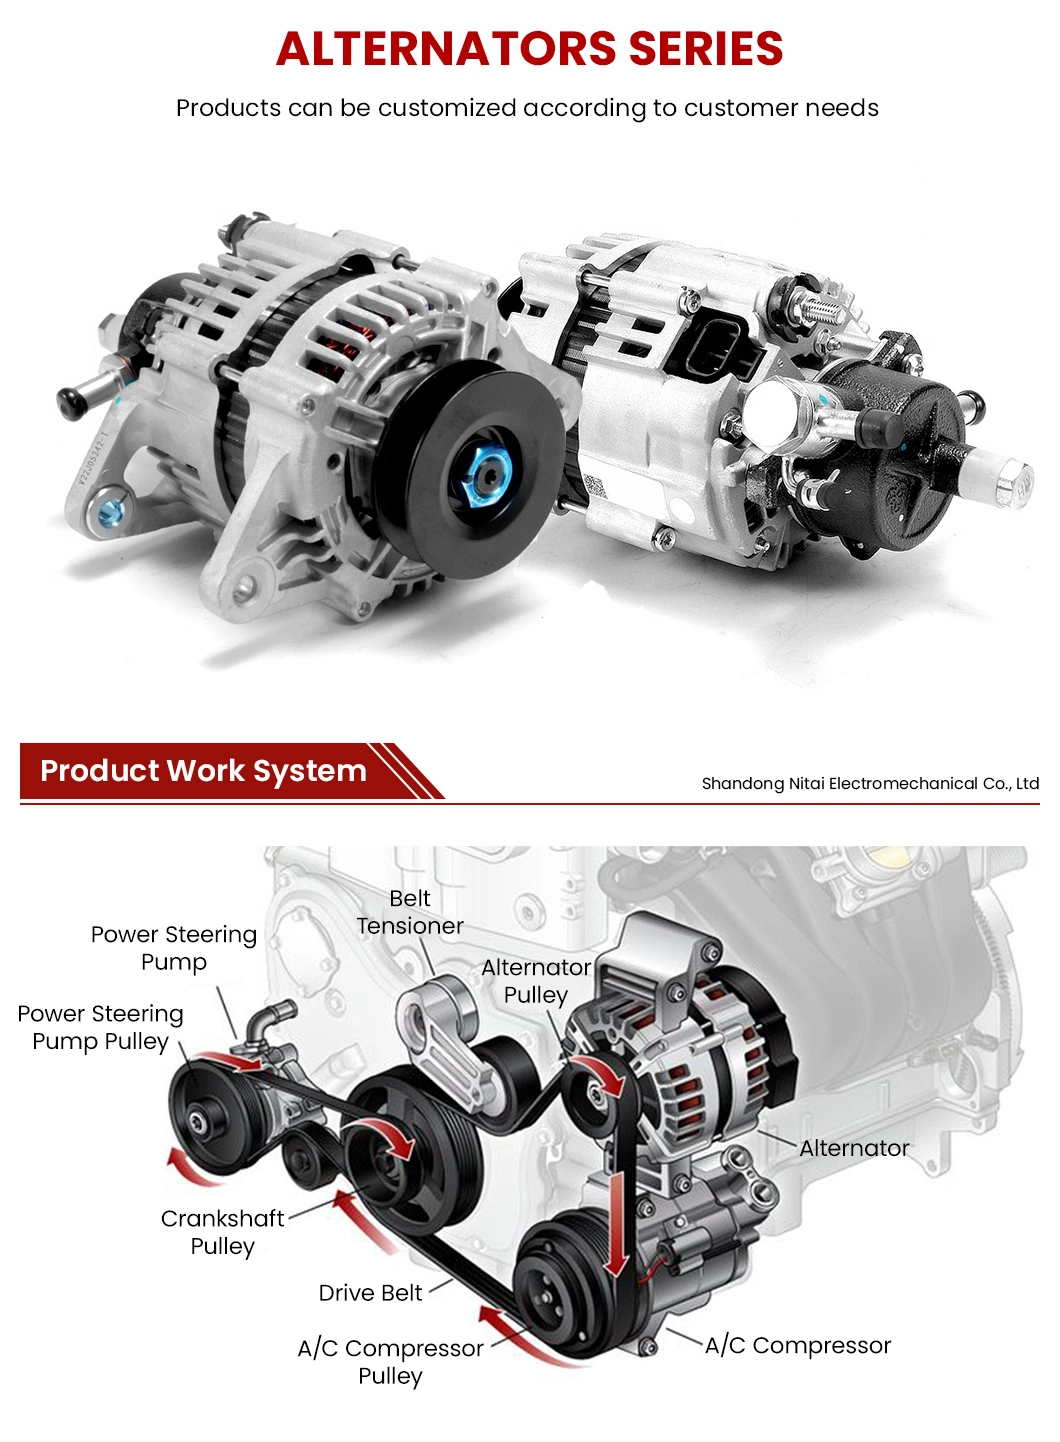 Nitai Universal Starter Motor Suppliers High Power Starter Motorchina 0001231011 Bosch 24V Starter Motor for Daf Iveco